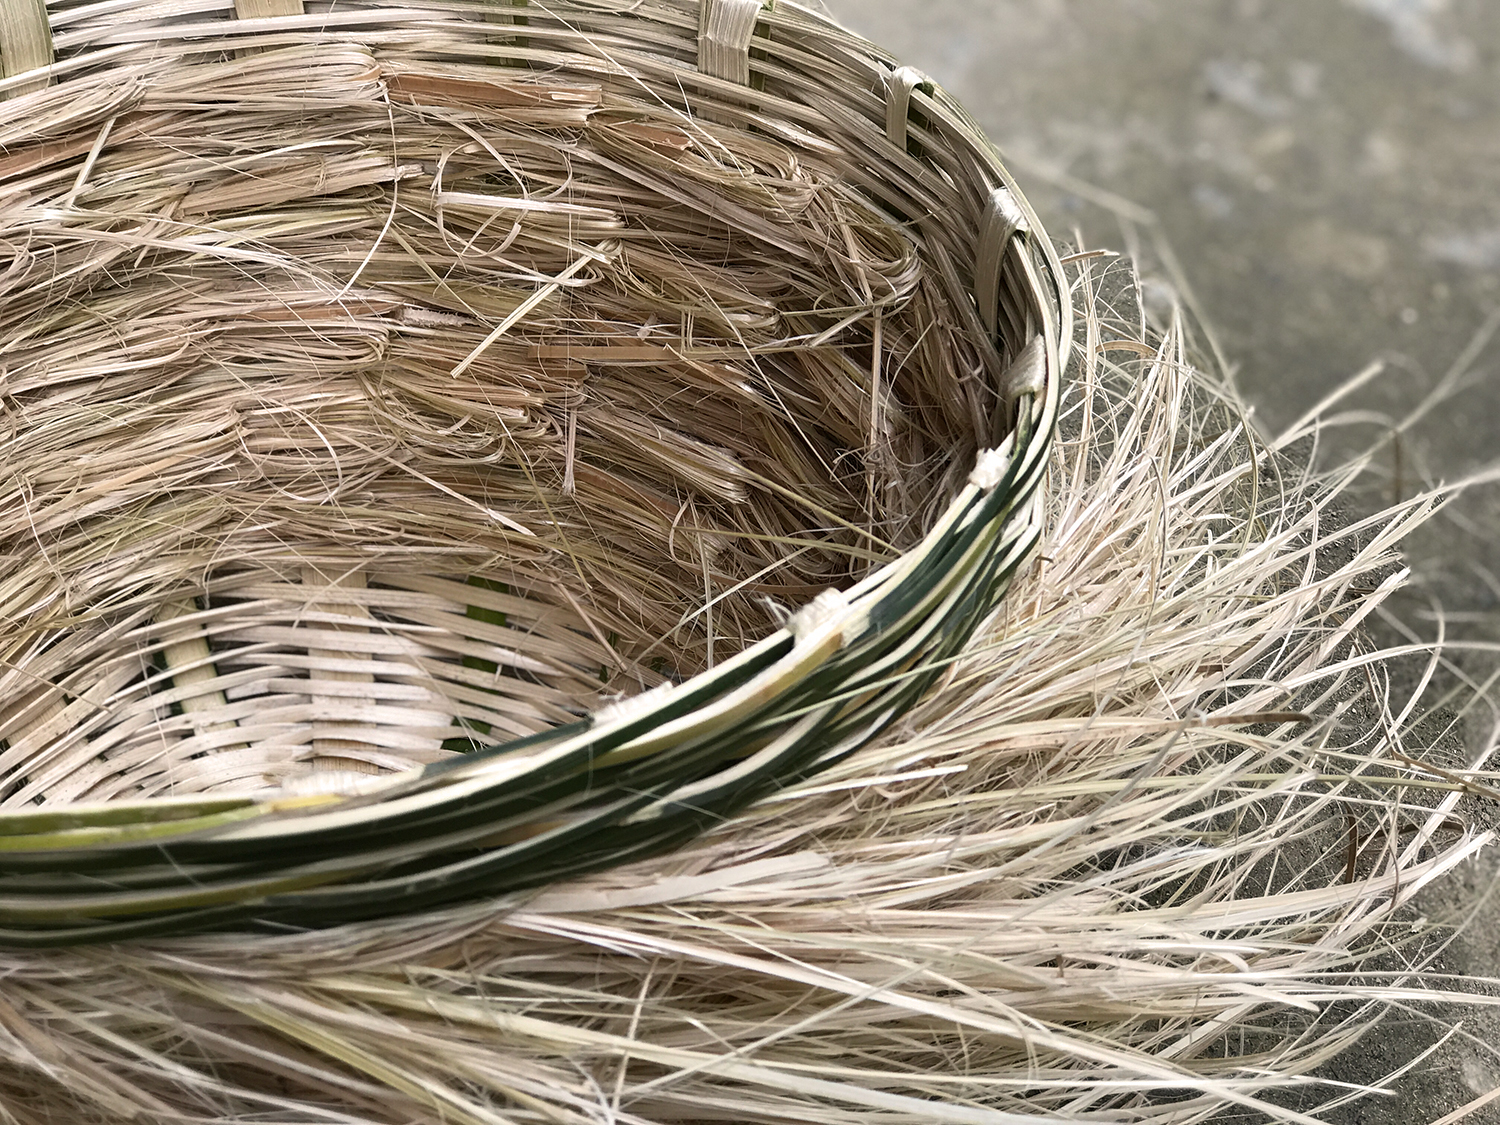 Basket No. 2 made of bamboo wast material.